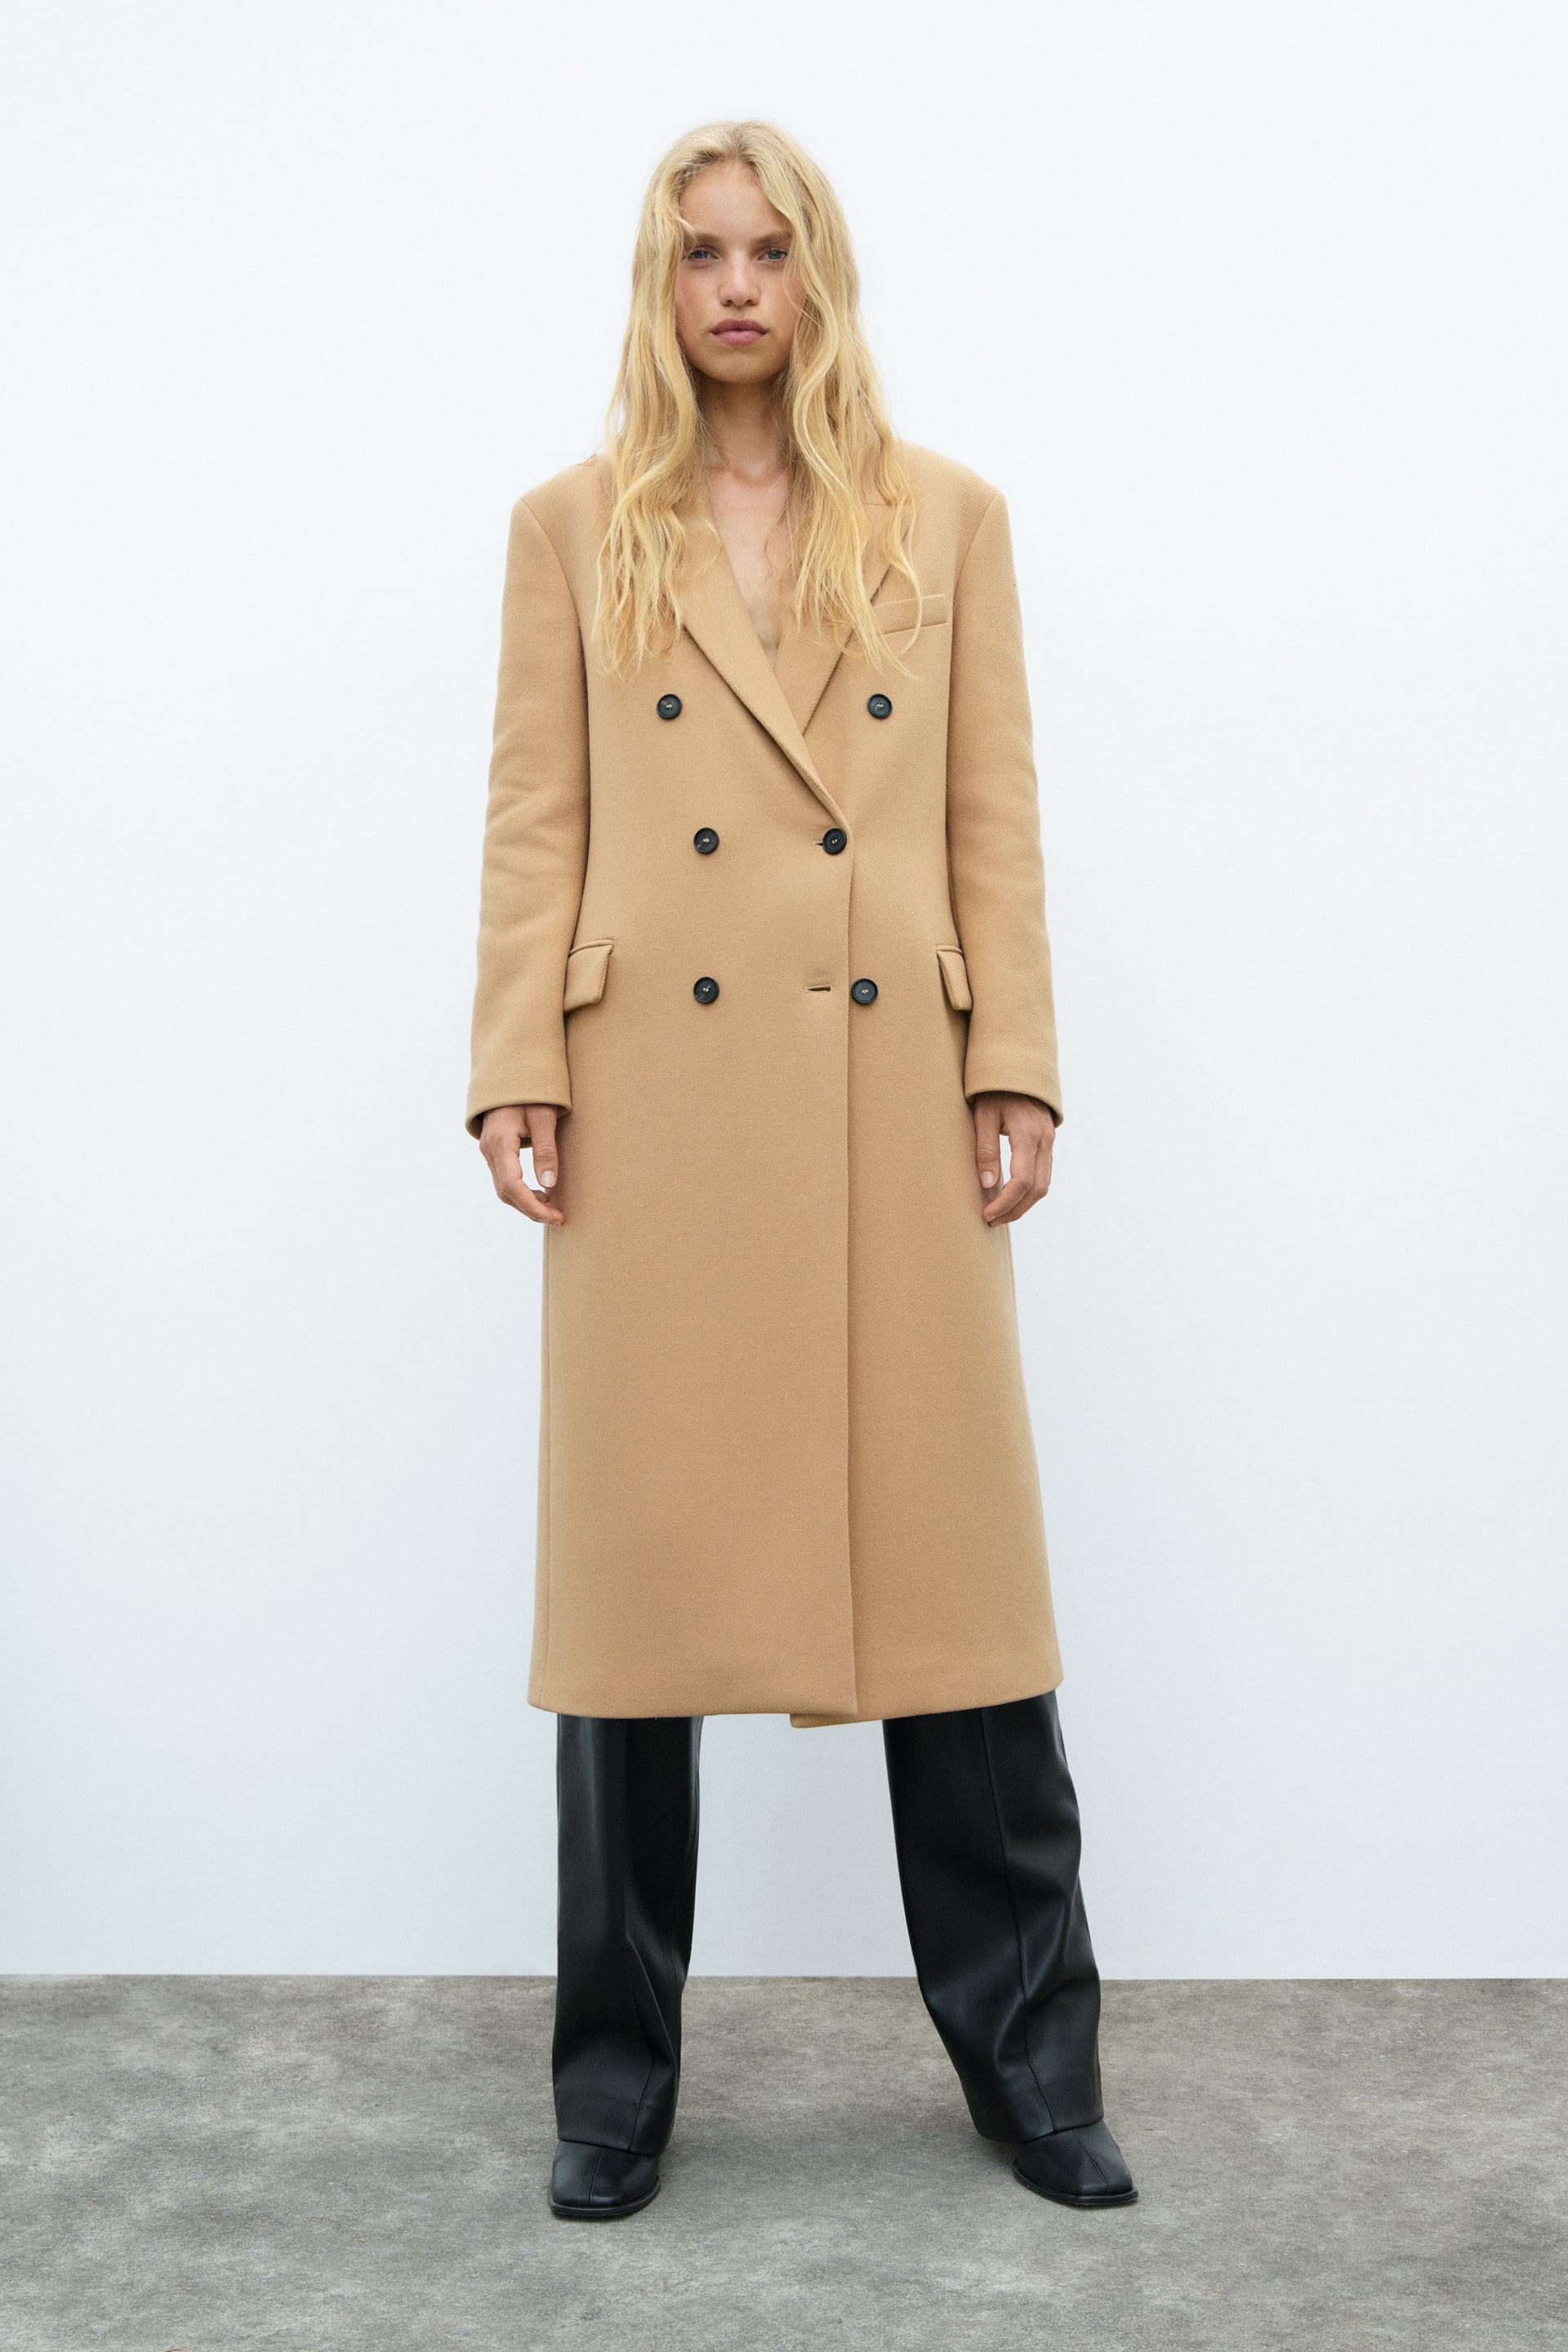 Outerwear To At Zara, Zara Winter Coats 2021